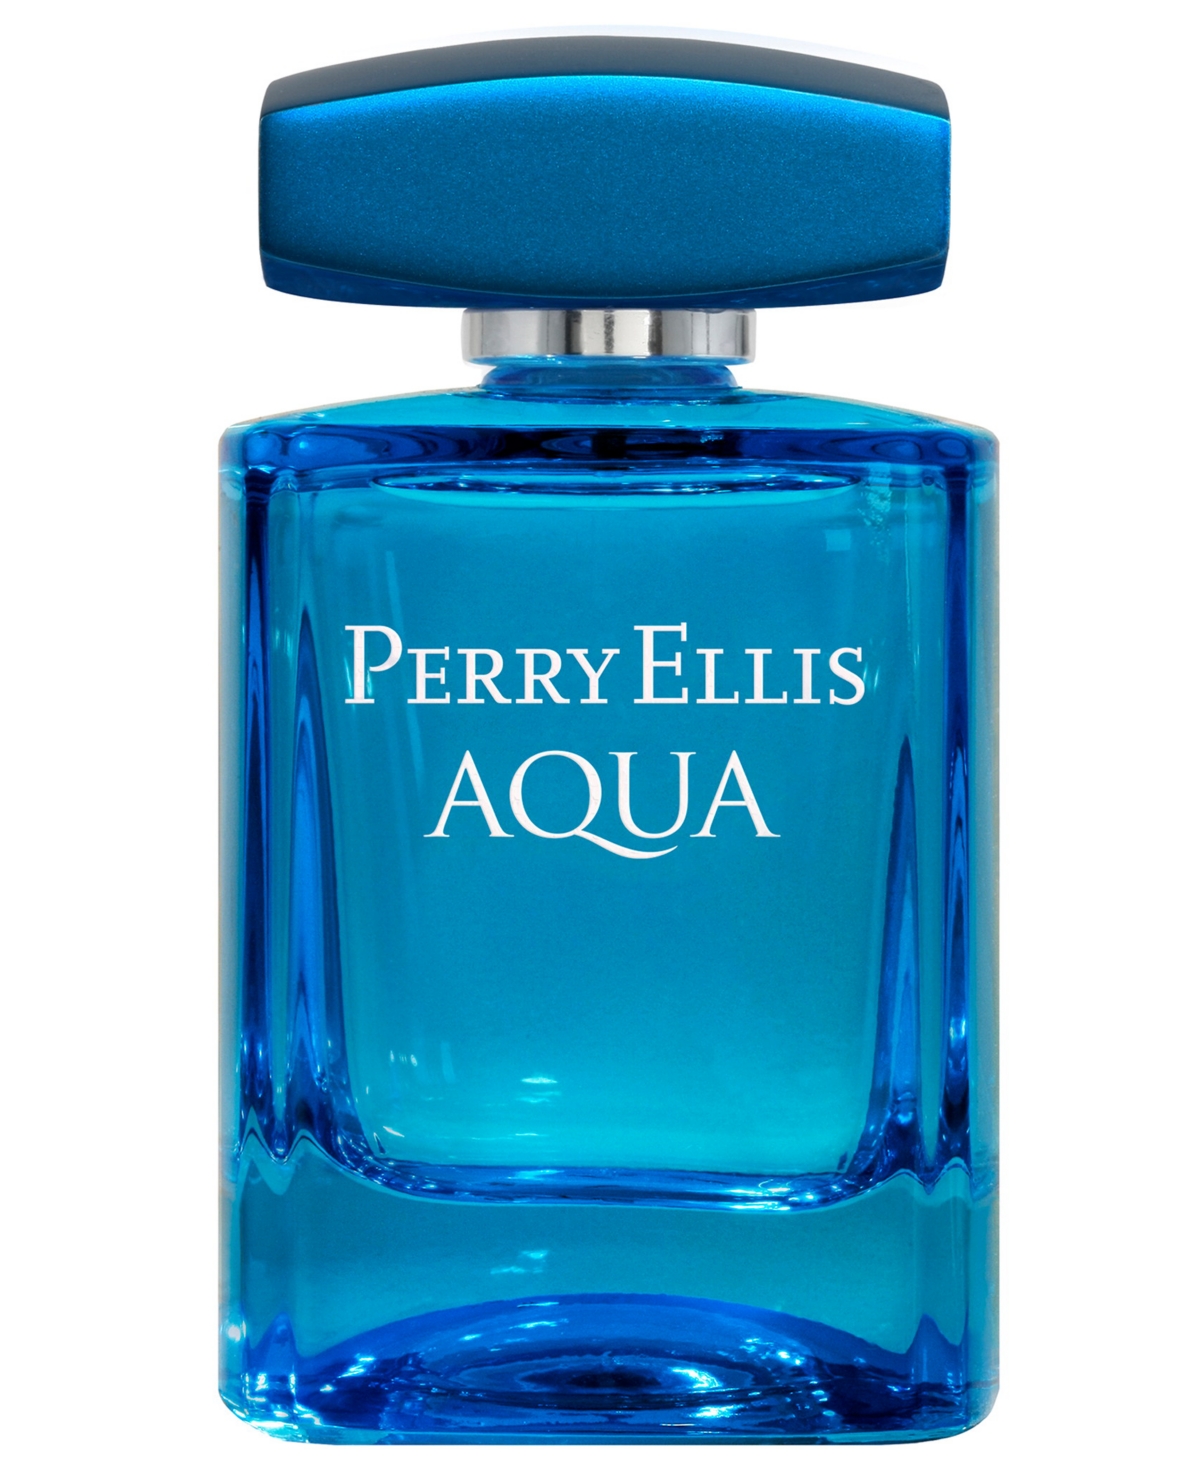 Perry Ellis Aqua Eau de Toilette Spray, 3.4 Fl Oz 